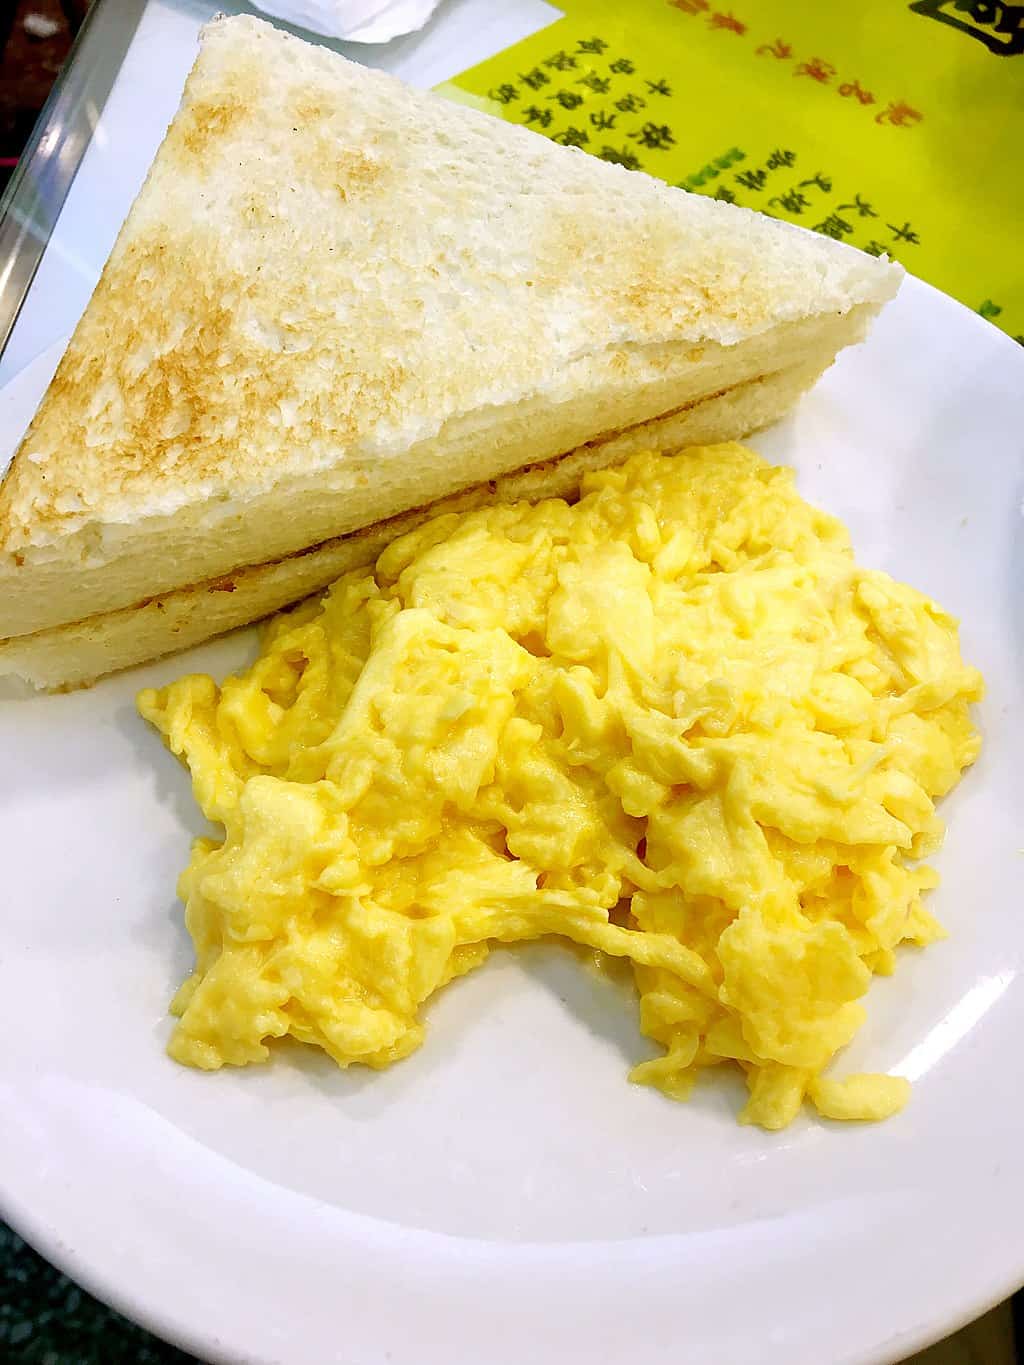 Scrambled egg sandwich on a white plate, common Hong Kong cuisine